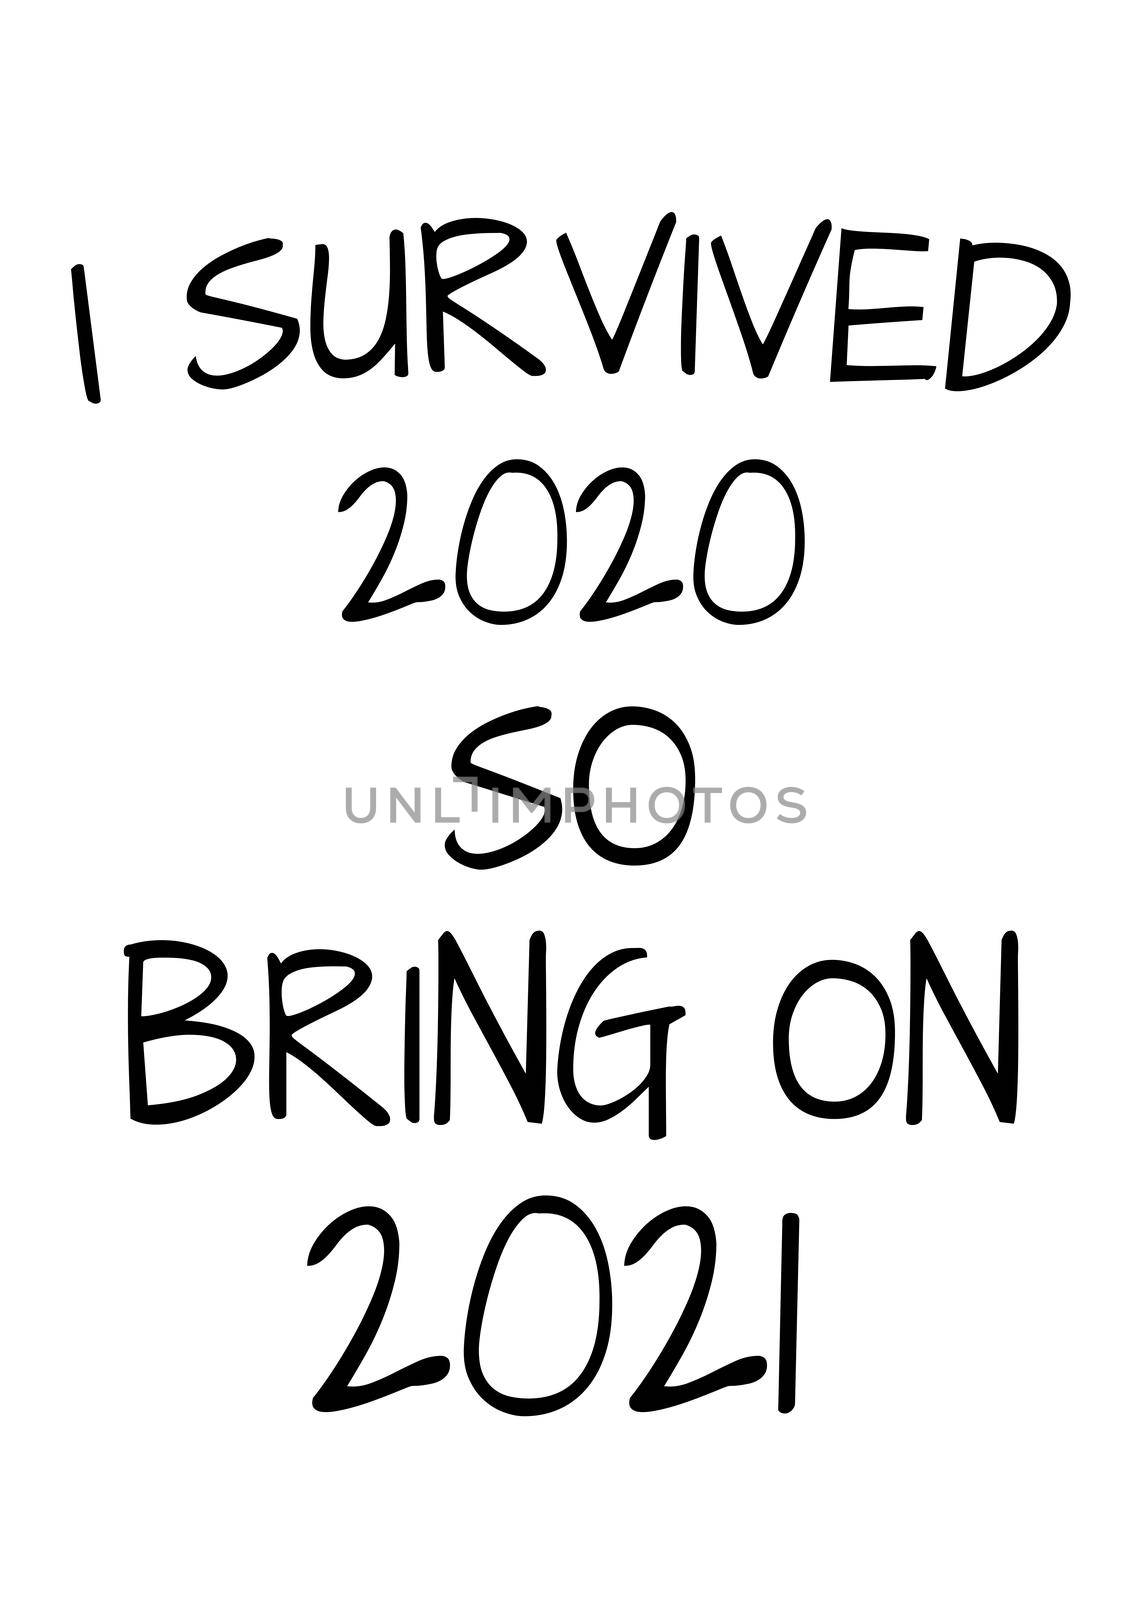 Bring on 2021